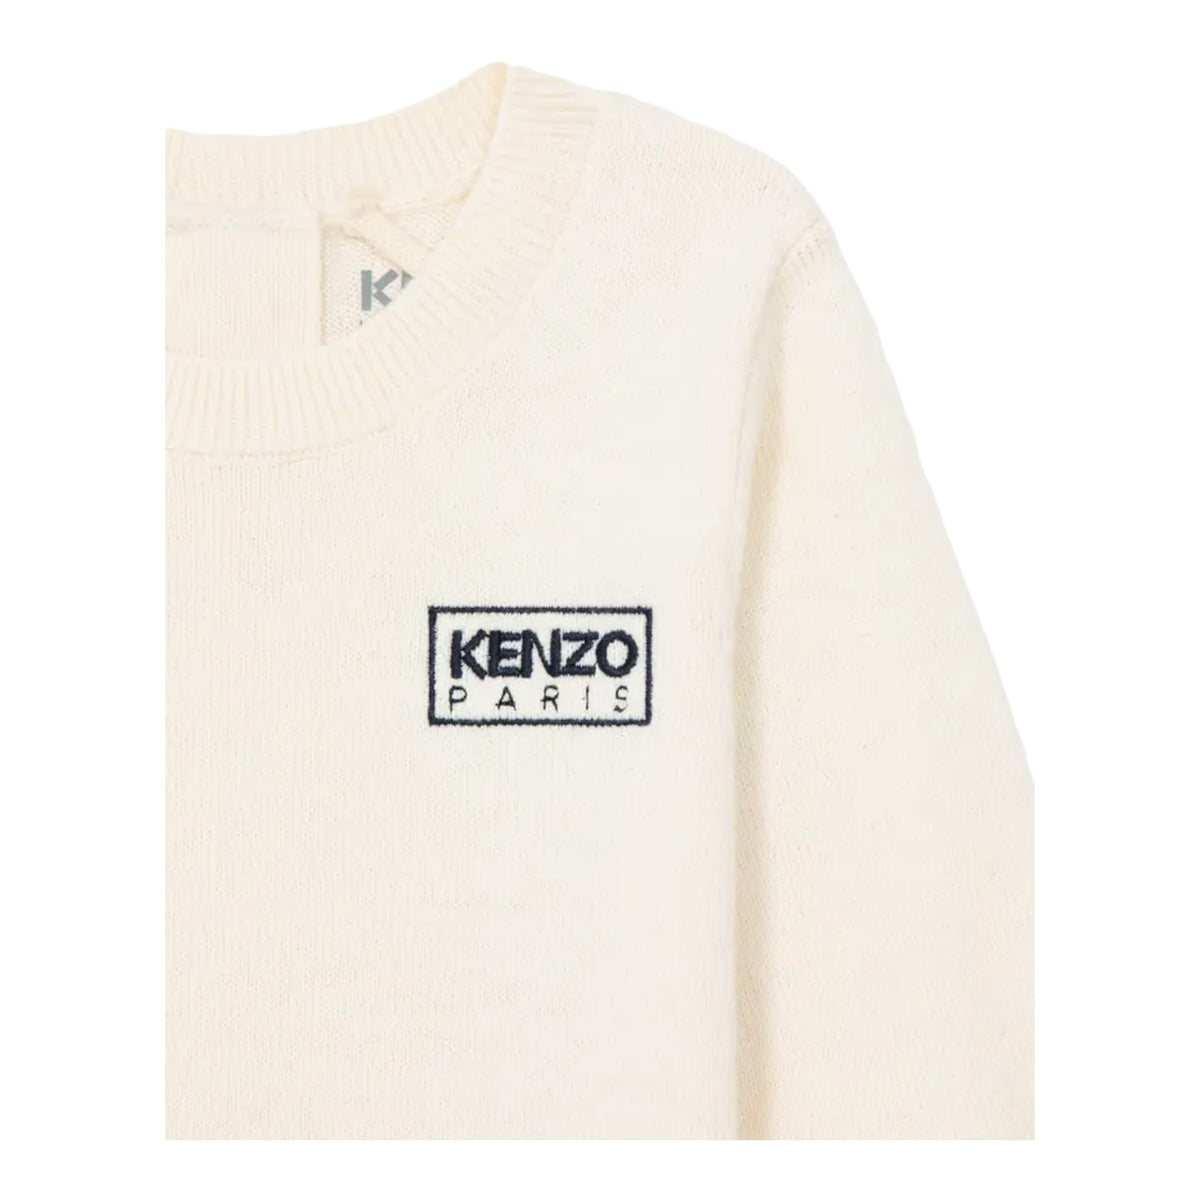 Kenzo Kids Toddler's 3pc Cotton/Cashmere Set